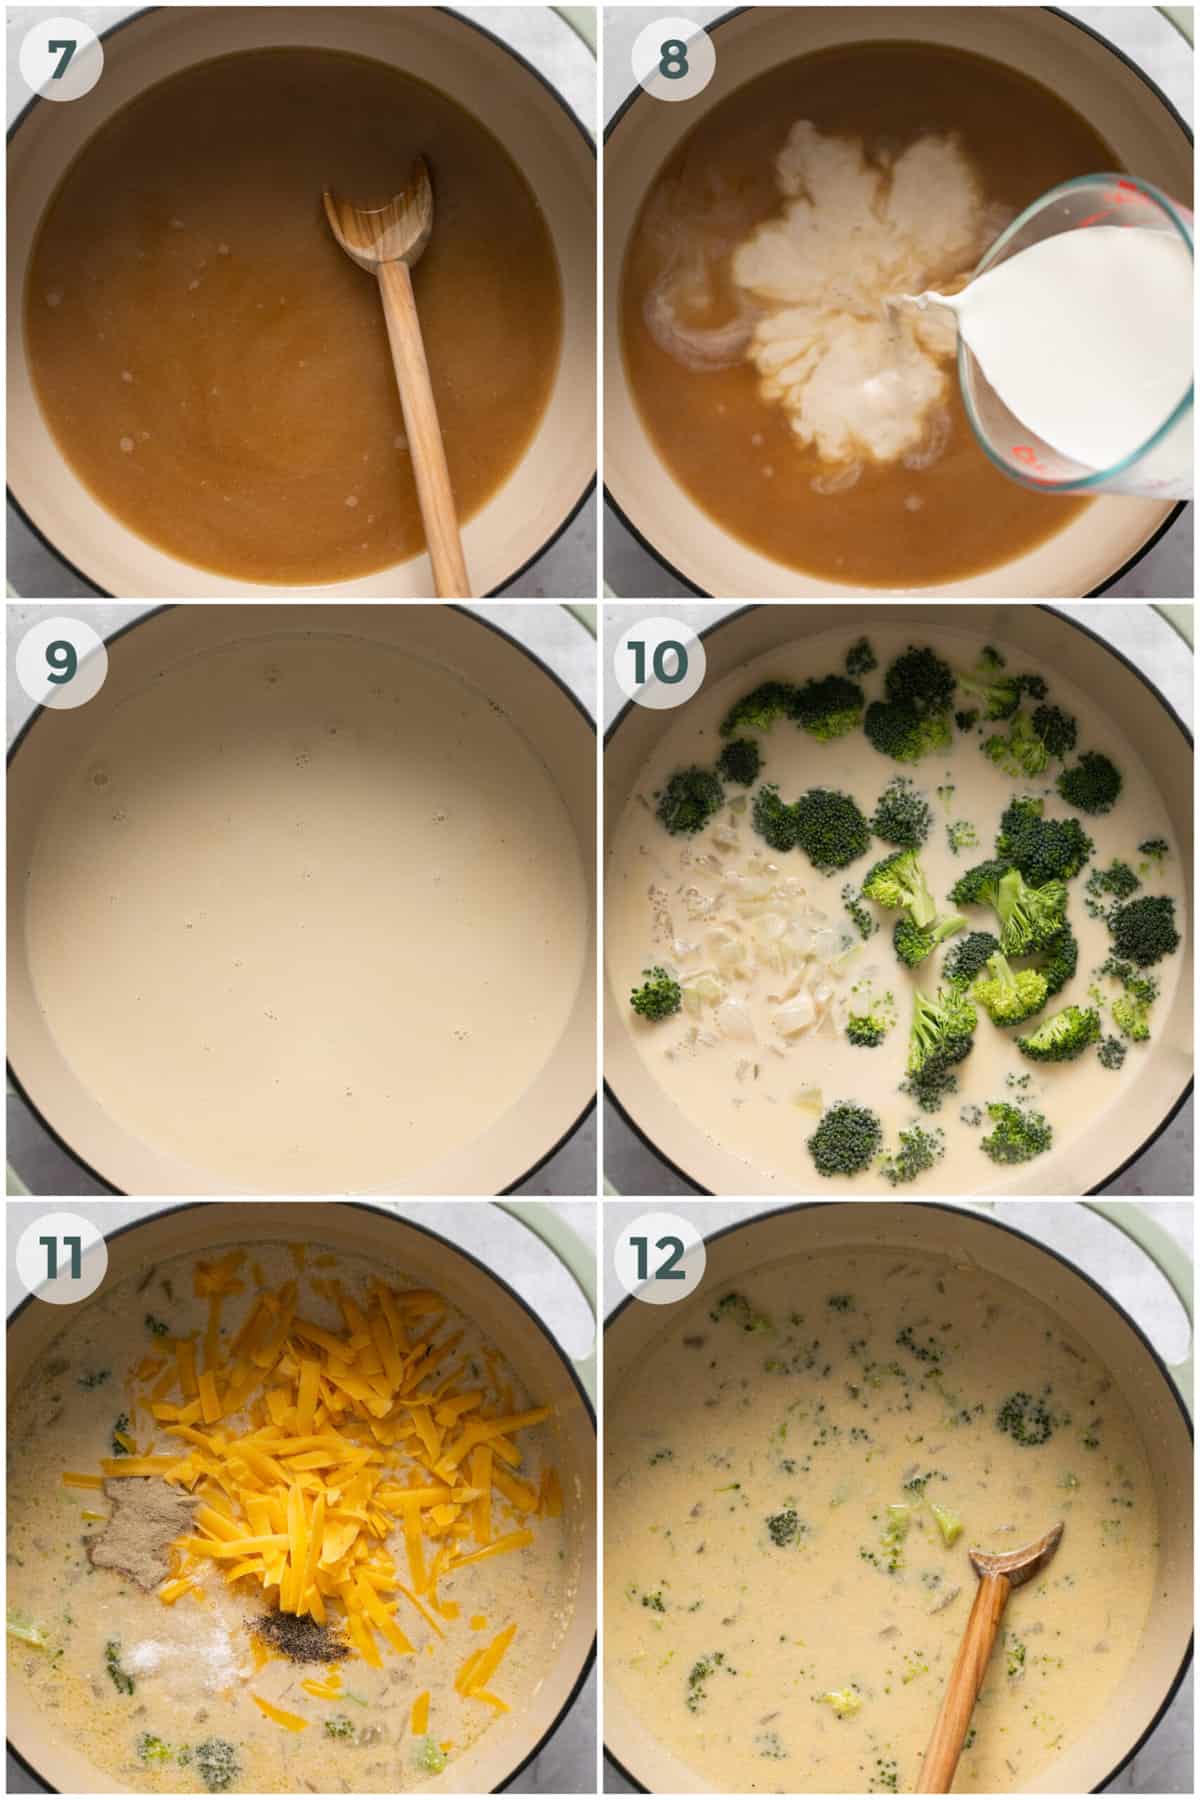 steps 7-12 of making cheddar broccoli soup